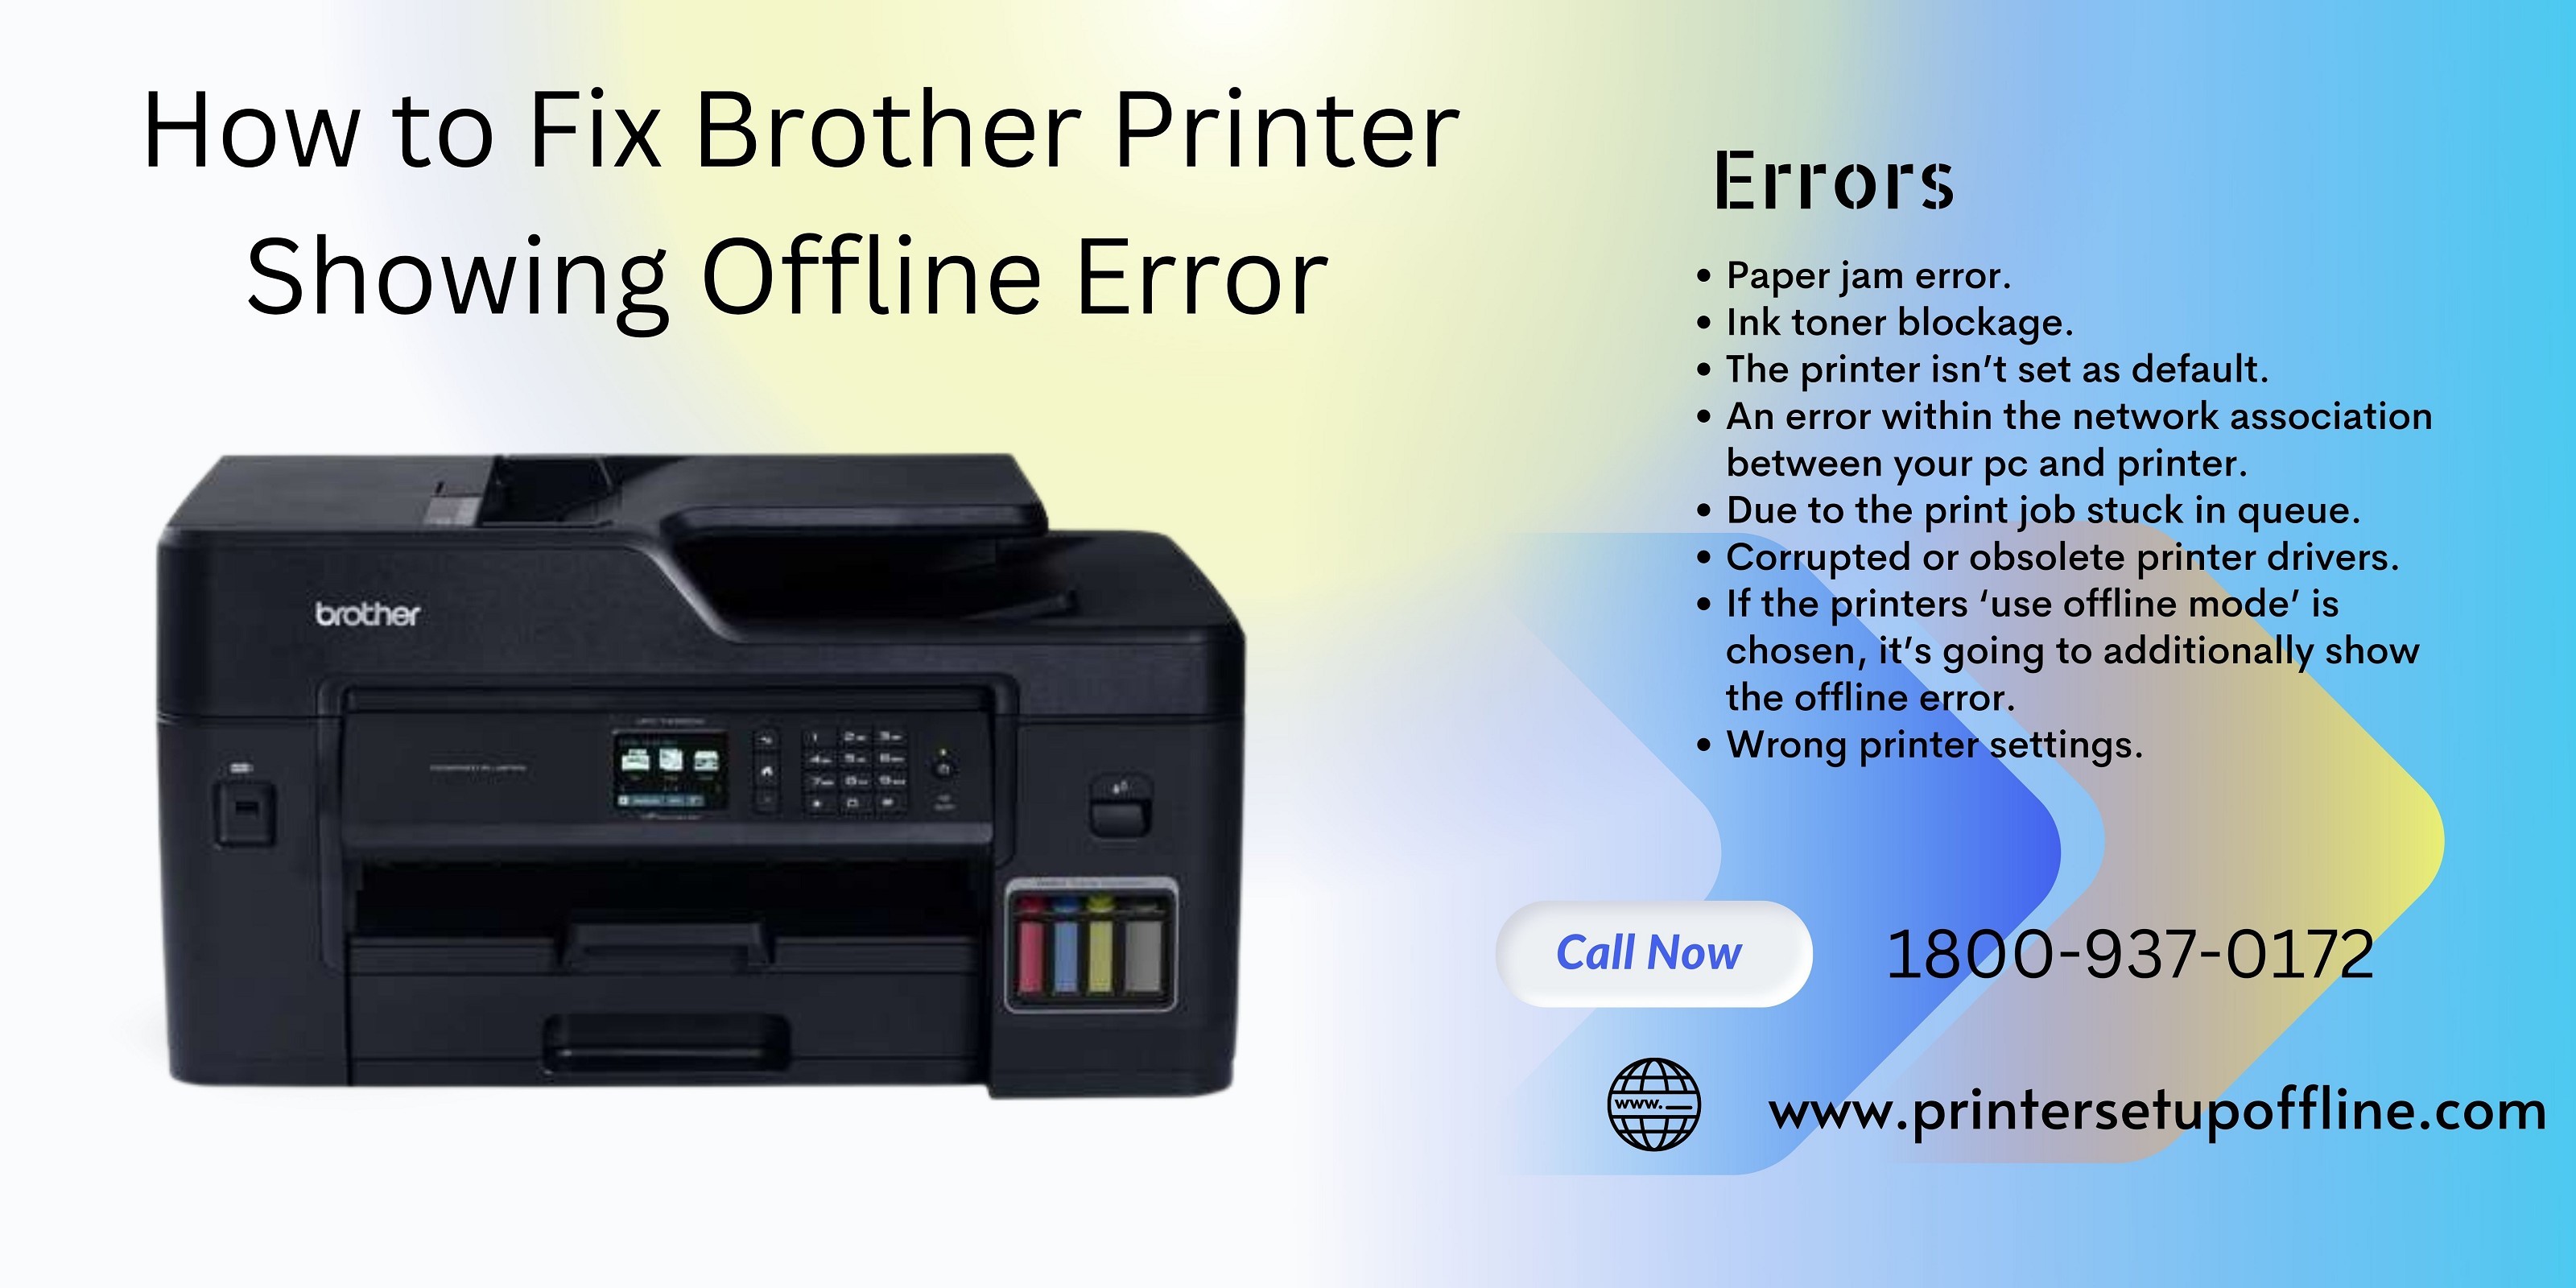 How to Fix Brother Printer Showing Offline Error